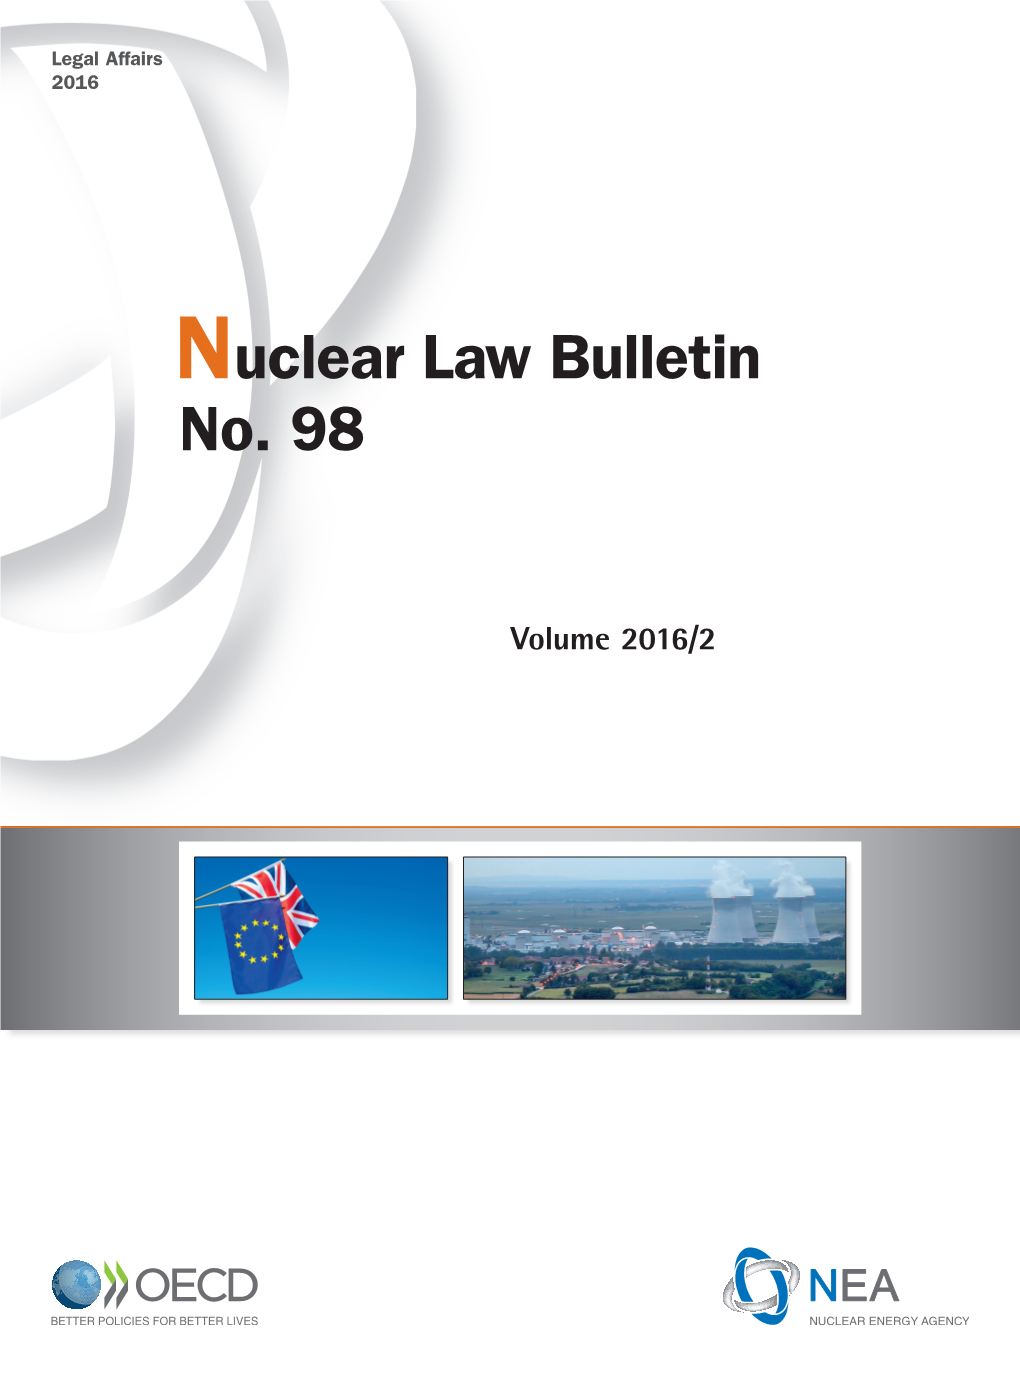 Nuclear Law Bulletin No. 98